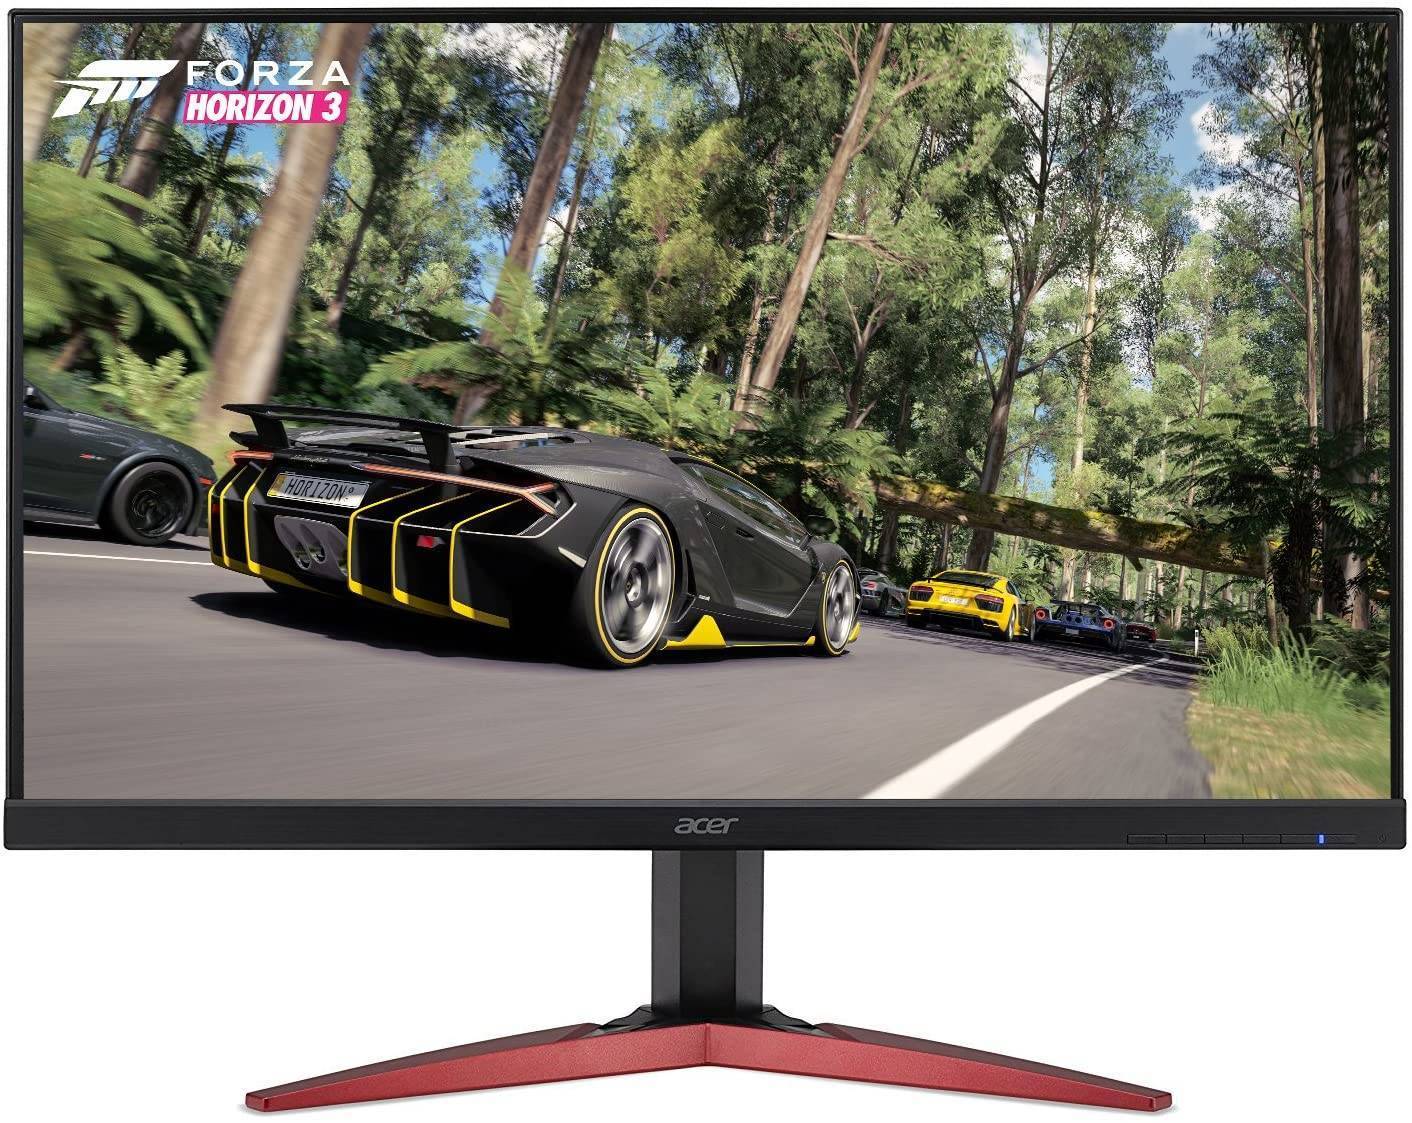 7.Acer KG271P- Fantastic Gaming monitor